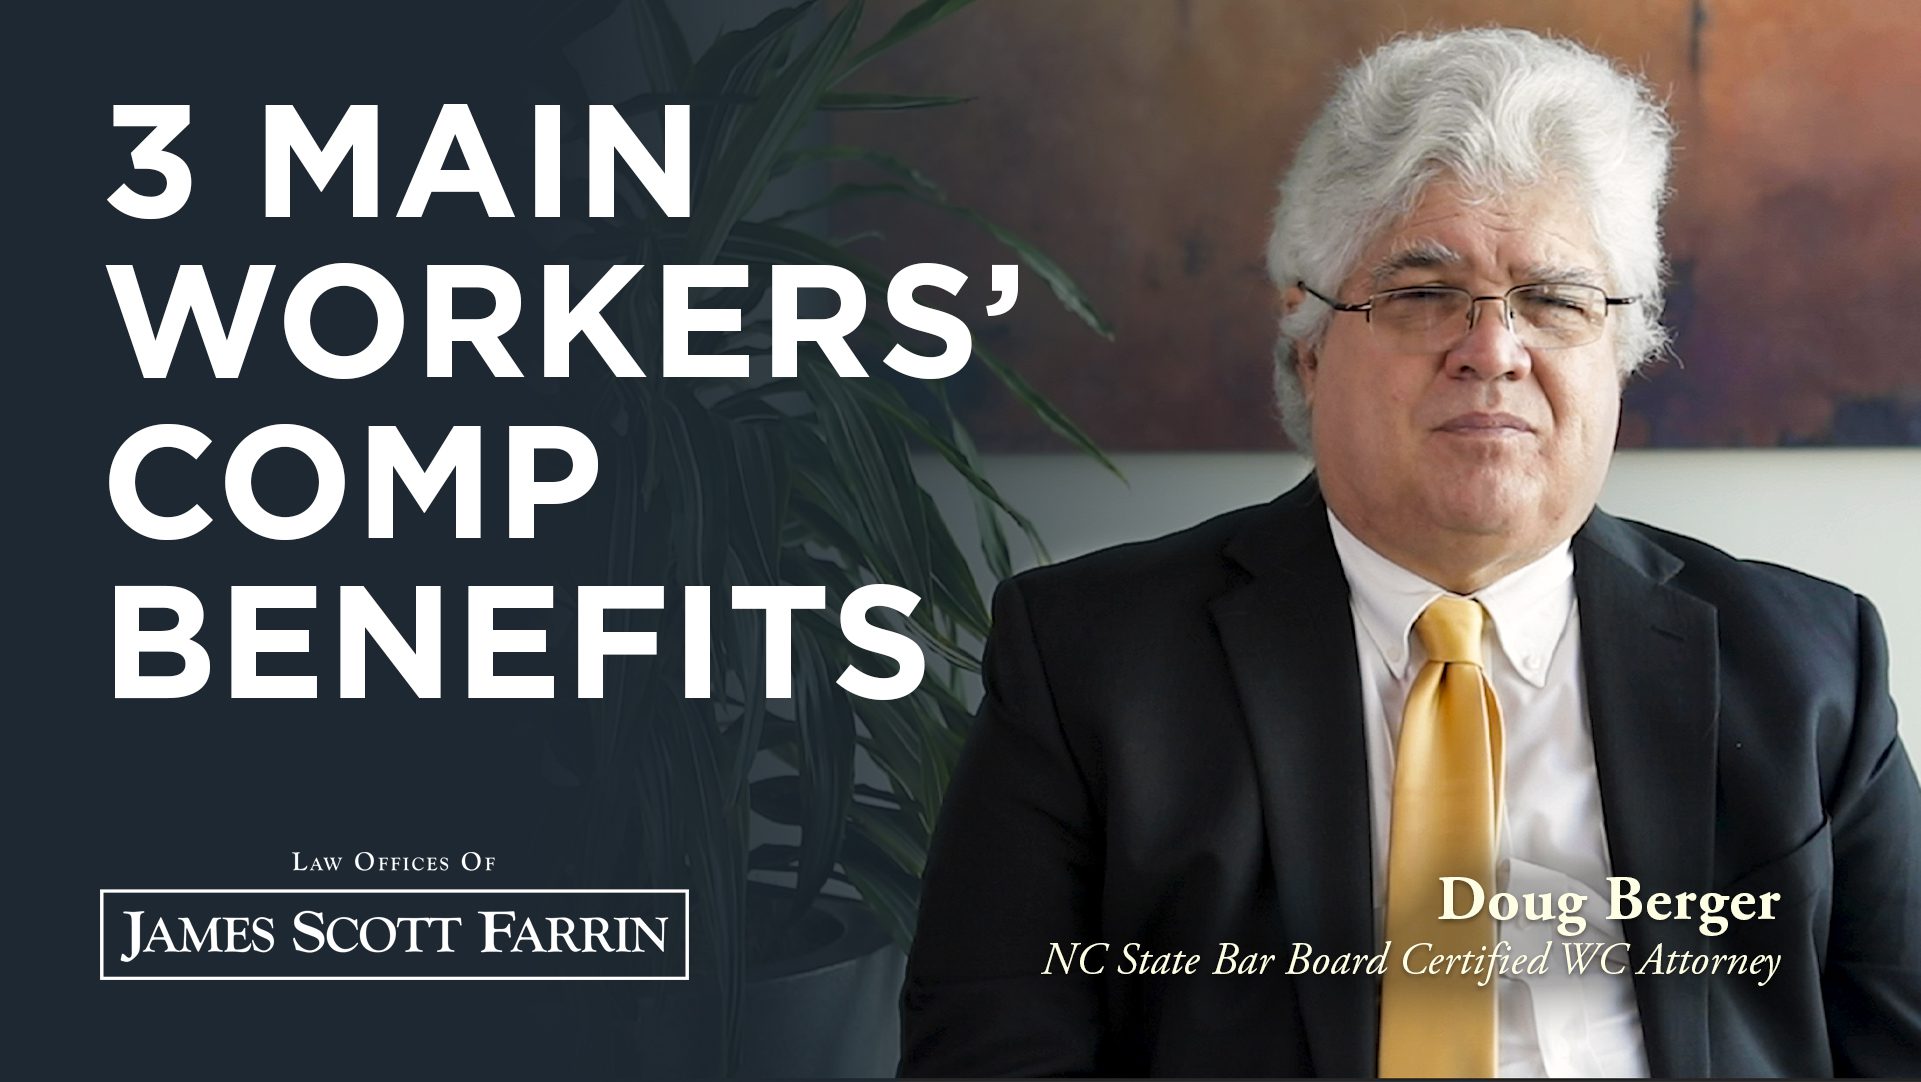 Doug Berger explains 3 Main Workers' Comp Benefits